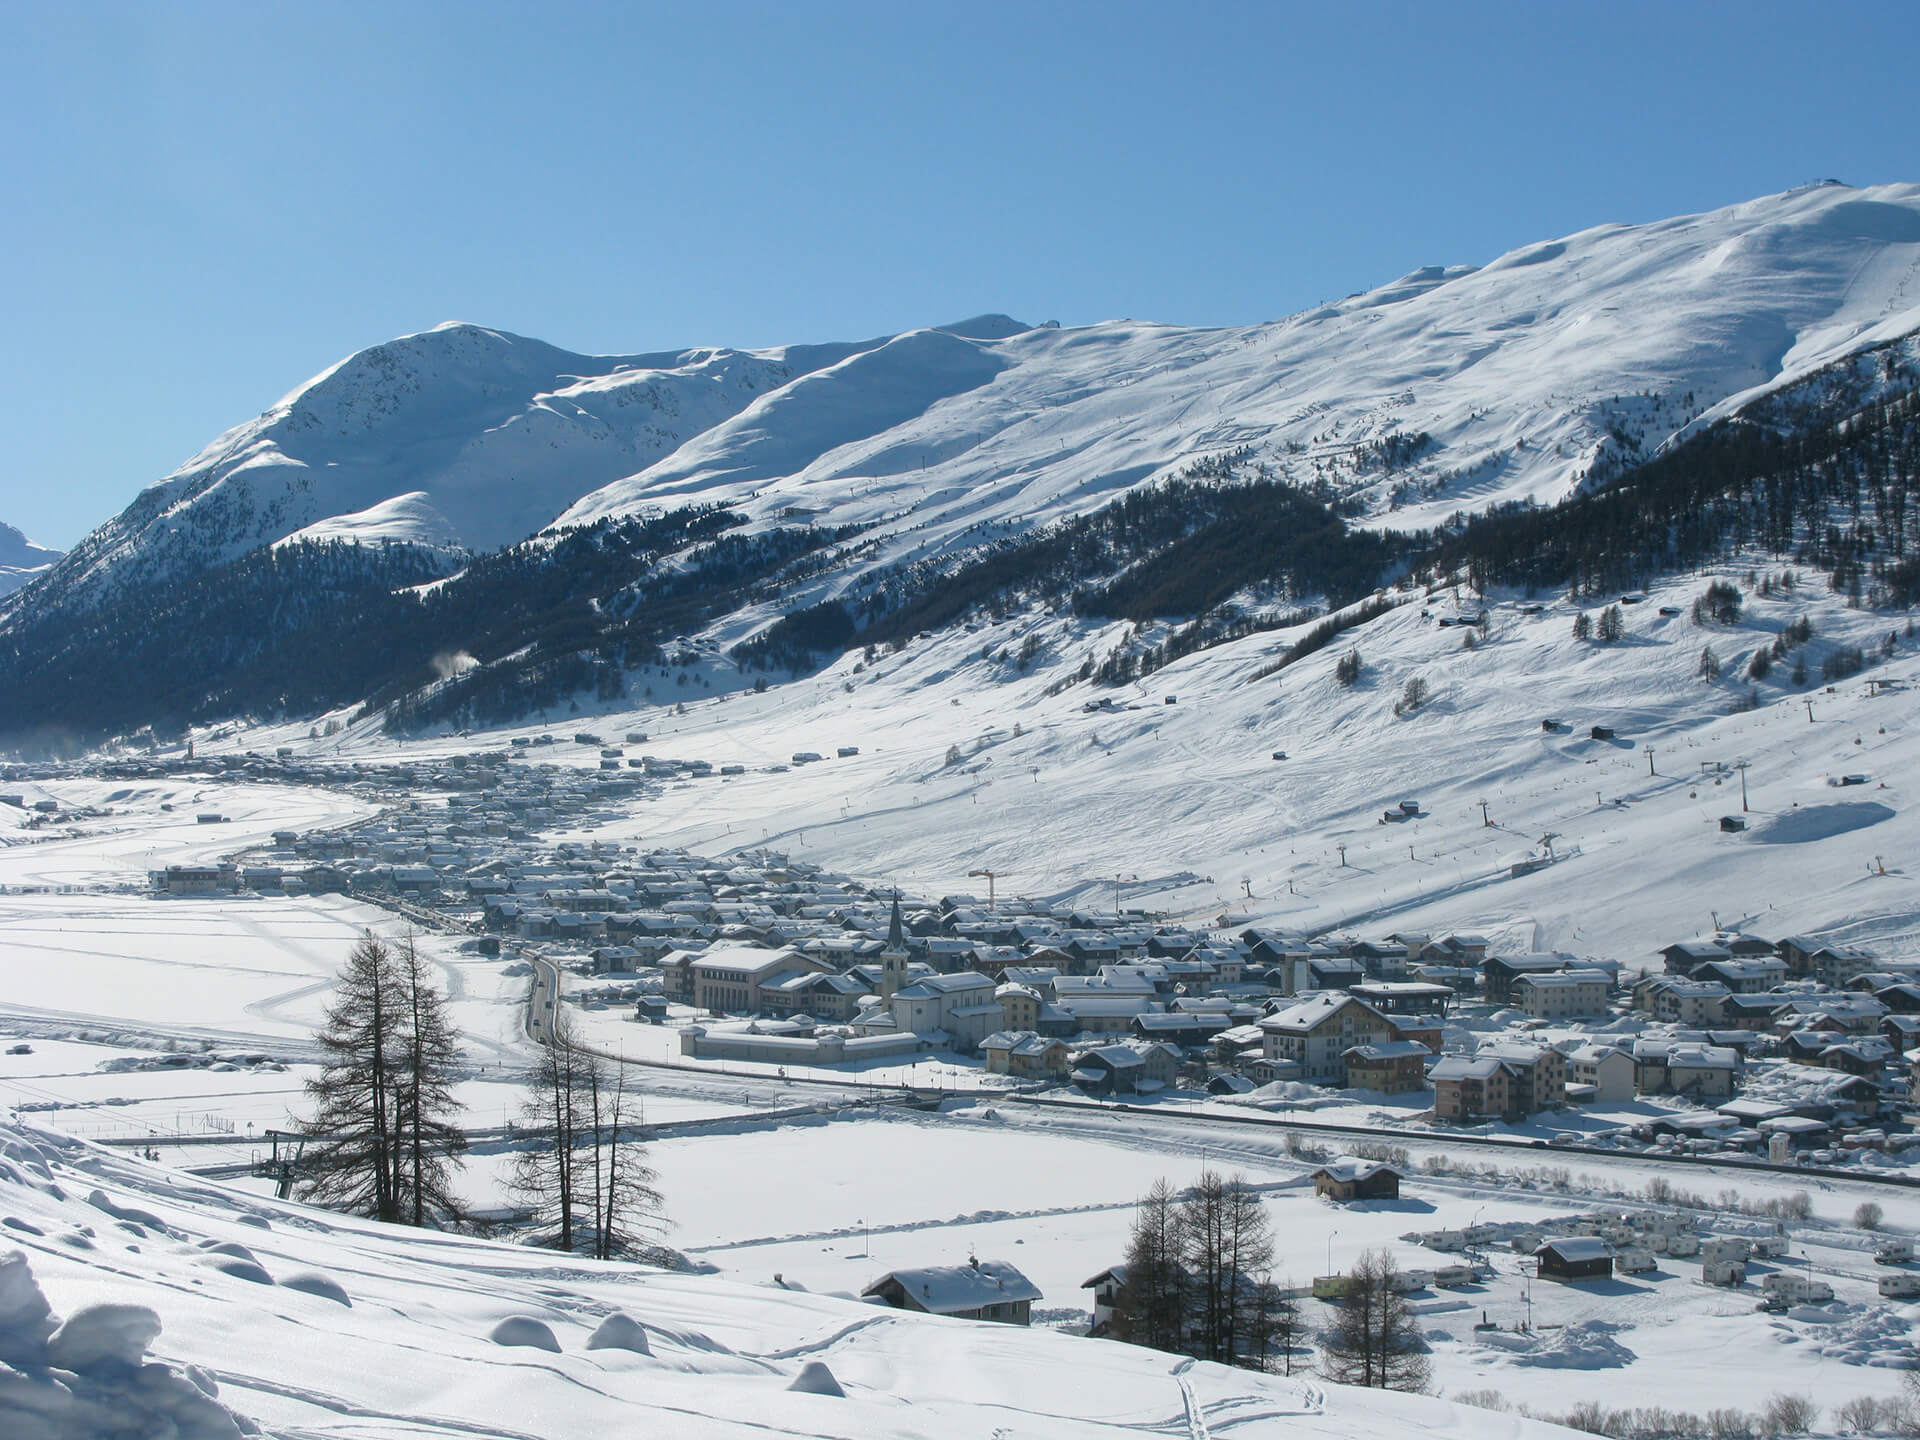 Alpen White Travel Agency In Livigno